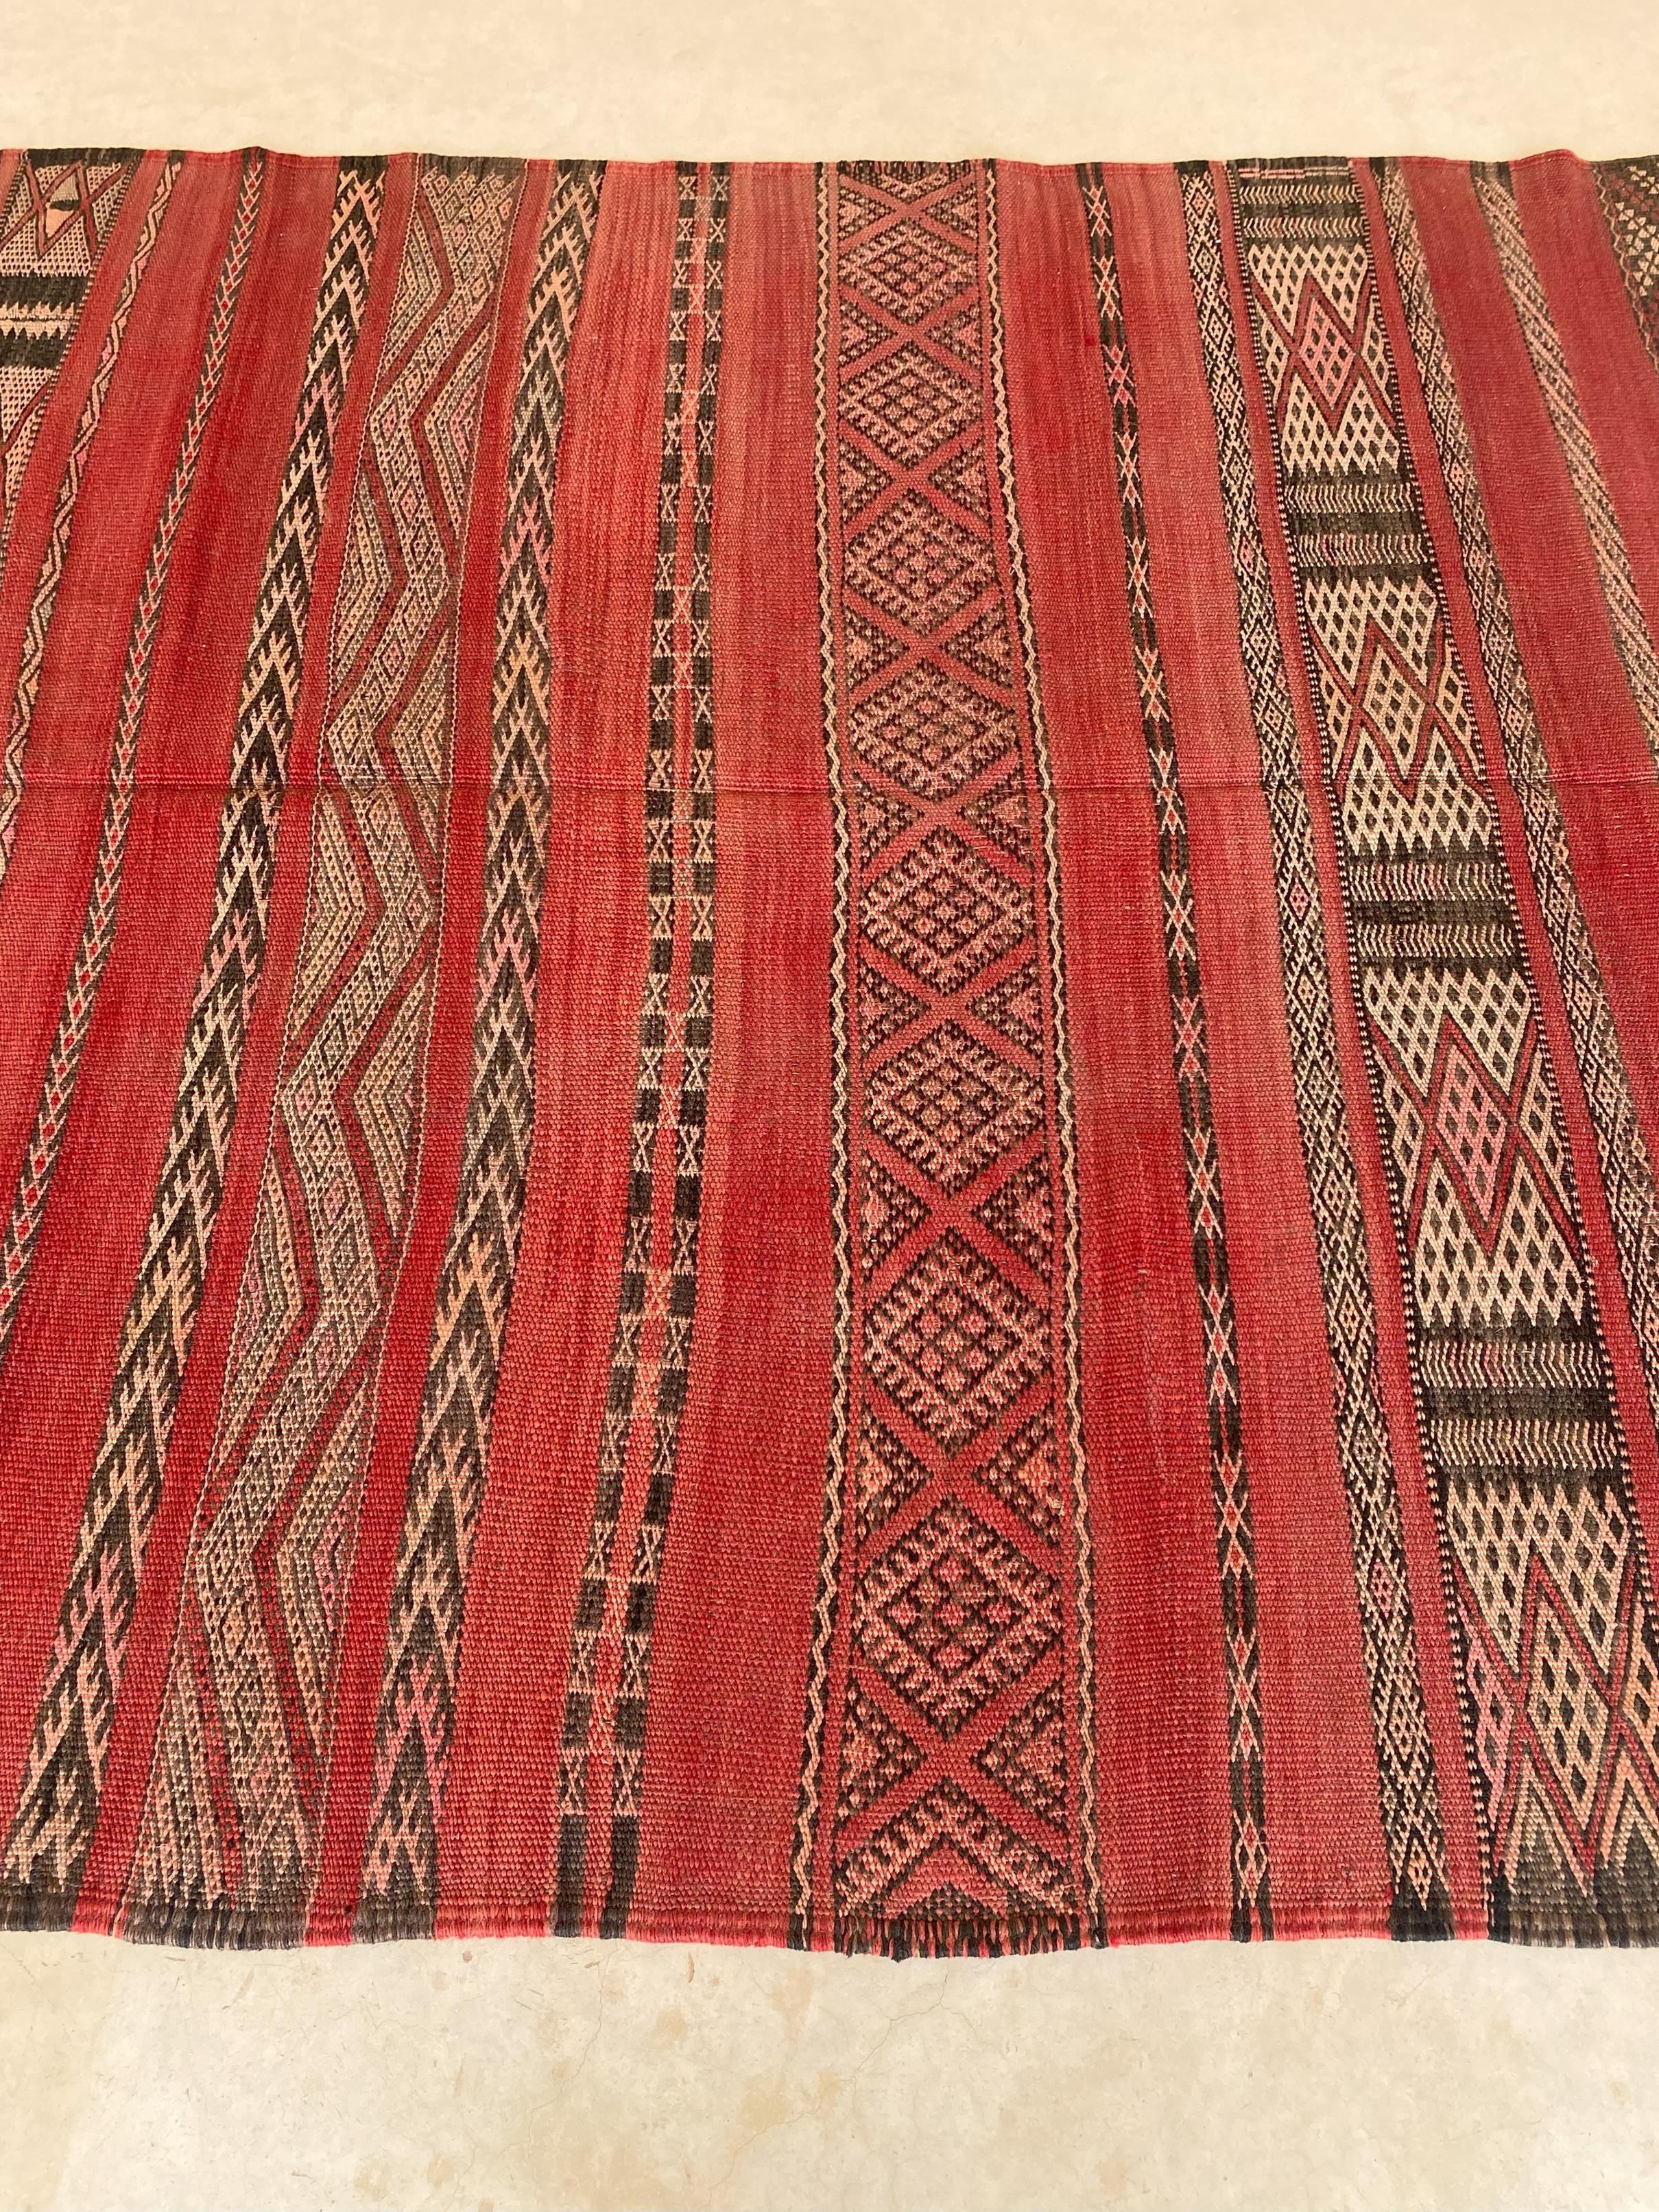 Vintage Moroccan Kilim rug - Red - 5x9.2feet / 152x282cm For Sale 2